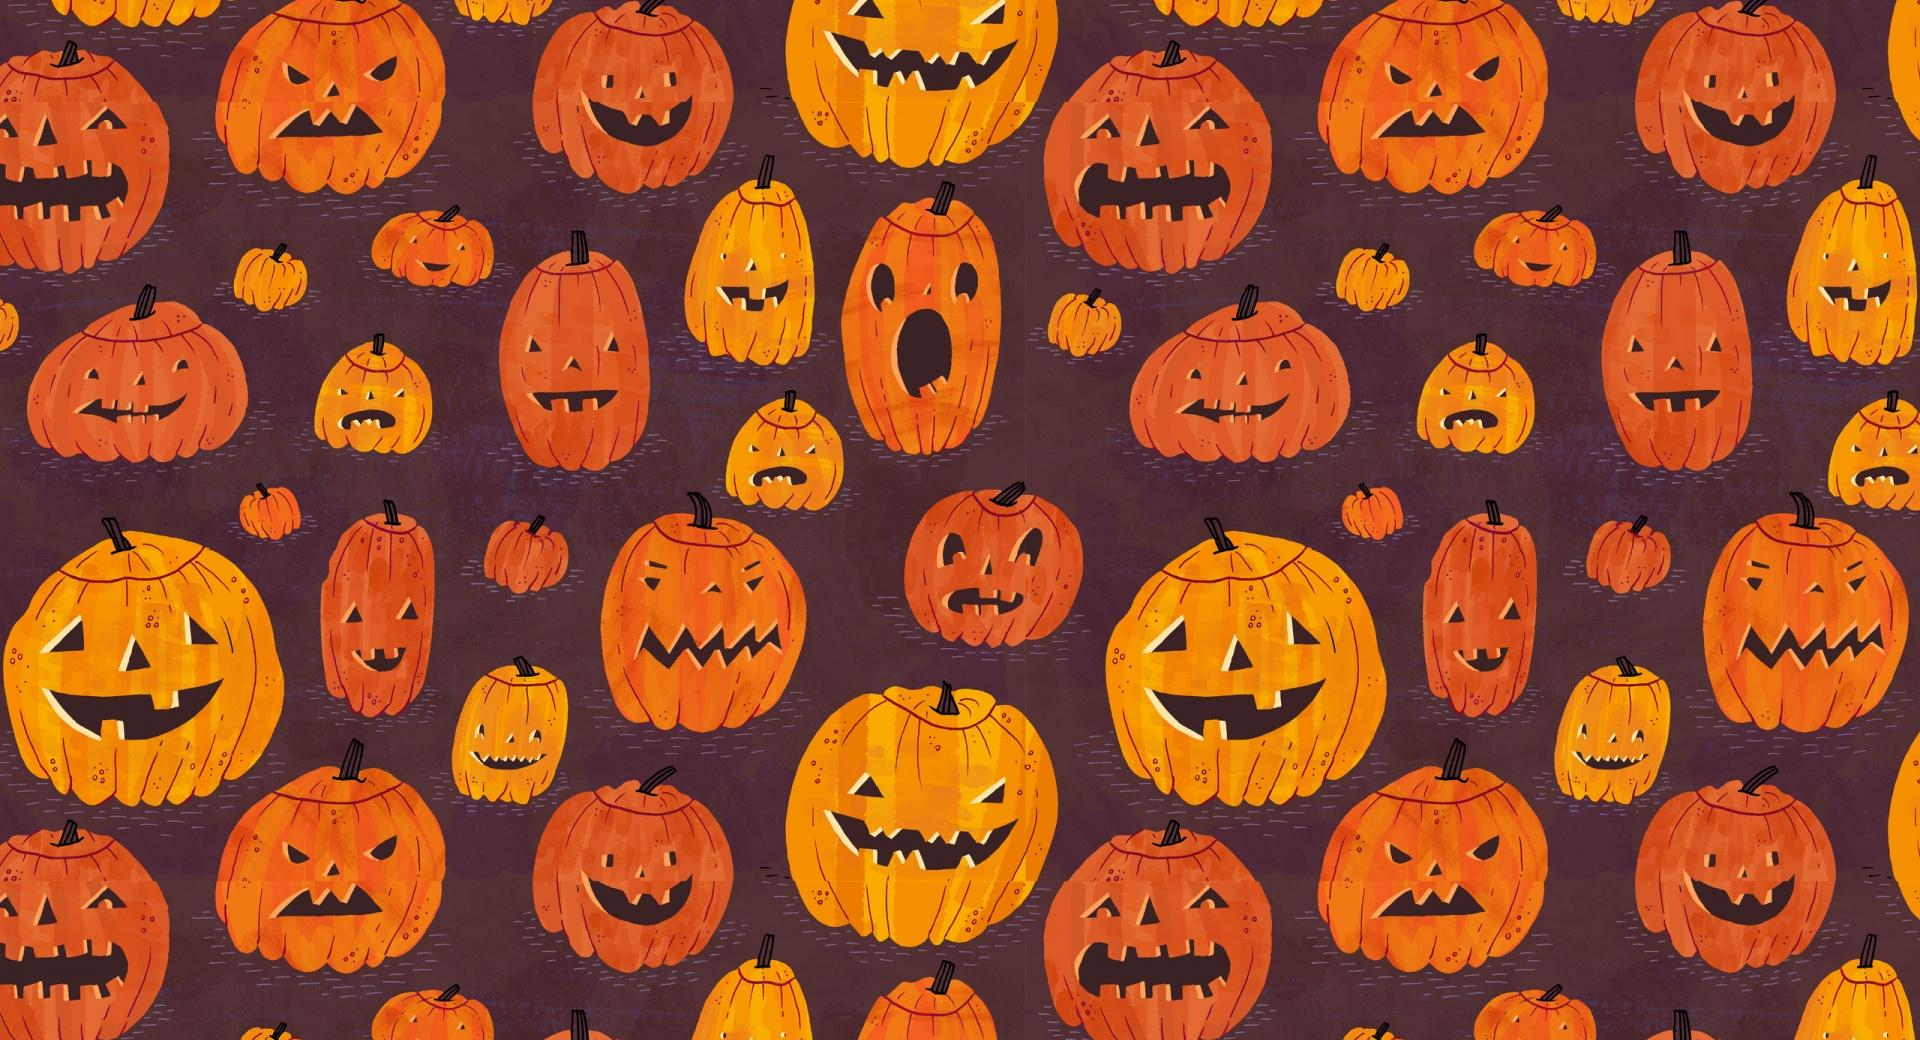 Halloween Pumpkins Pattern at 1024 x 1024 iPad size wallpapers HD quality